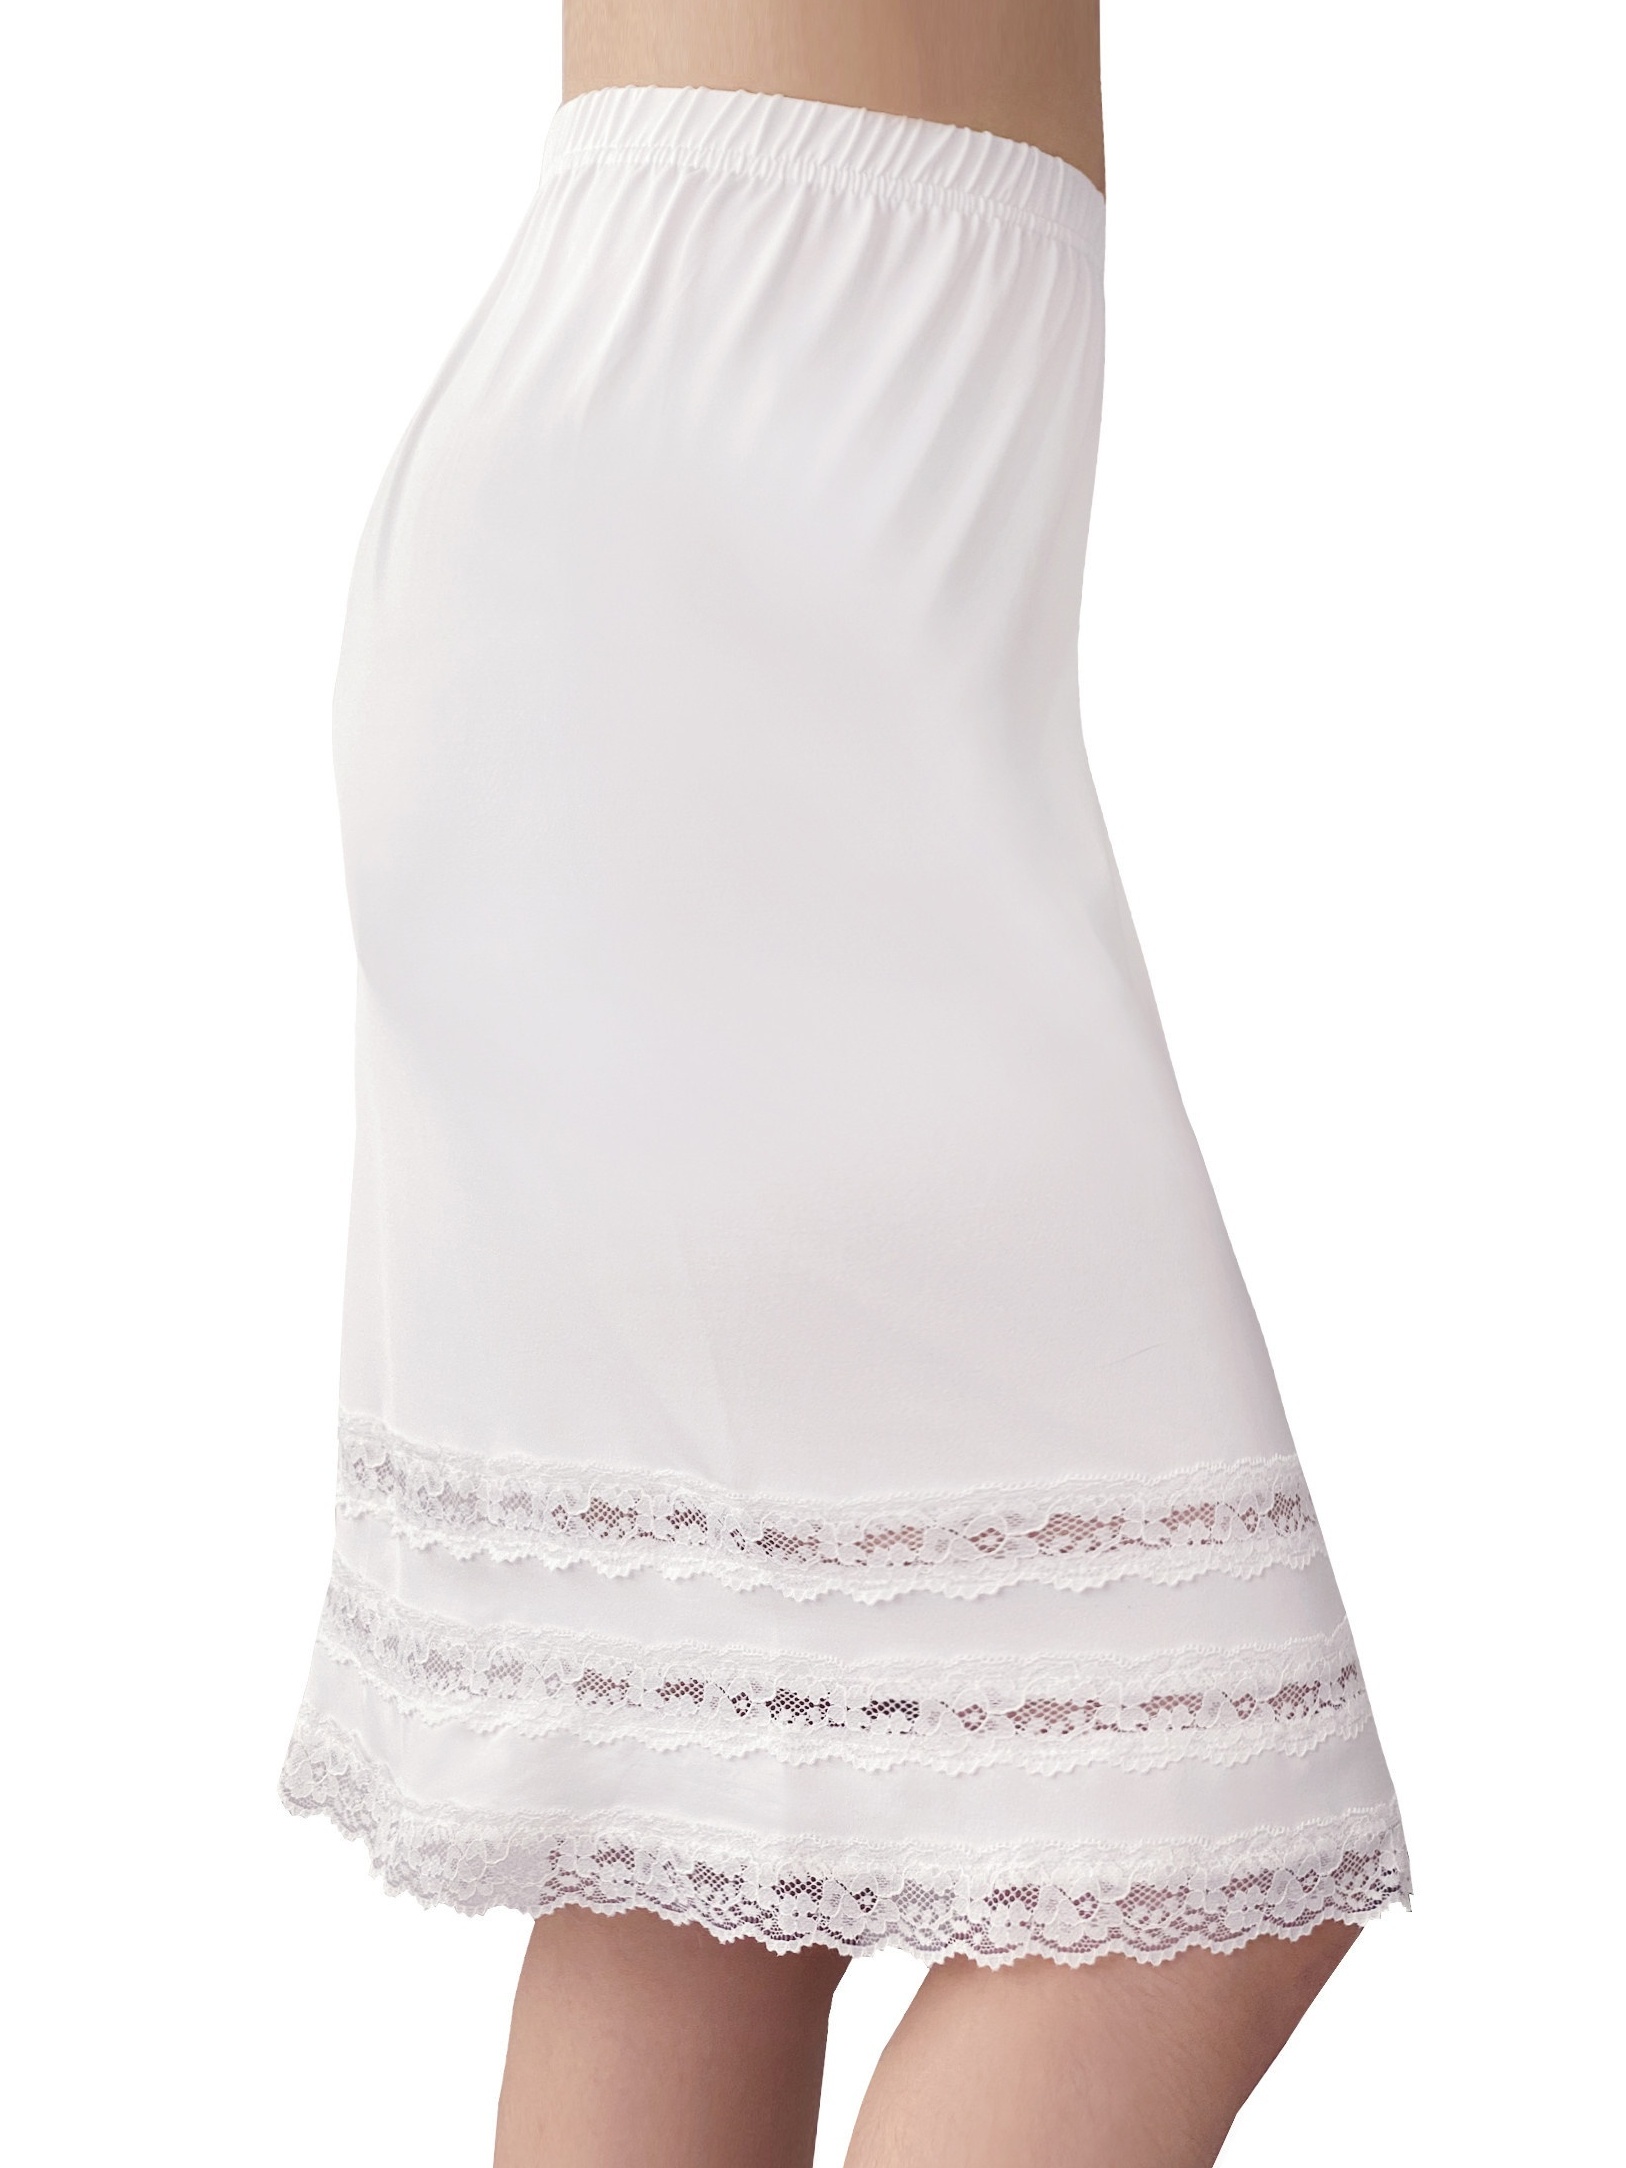 White Pencil Women Shapewear Skirt, Ladies Cotton with Drawstring